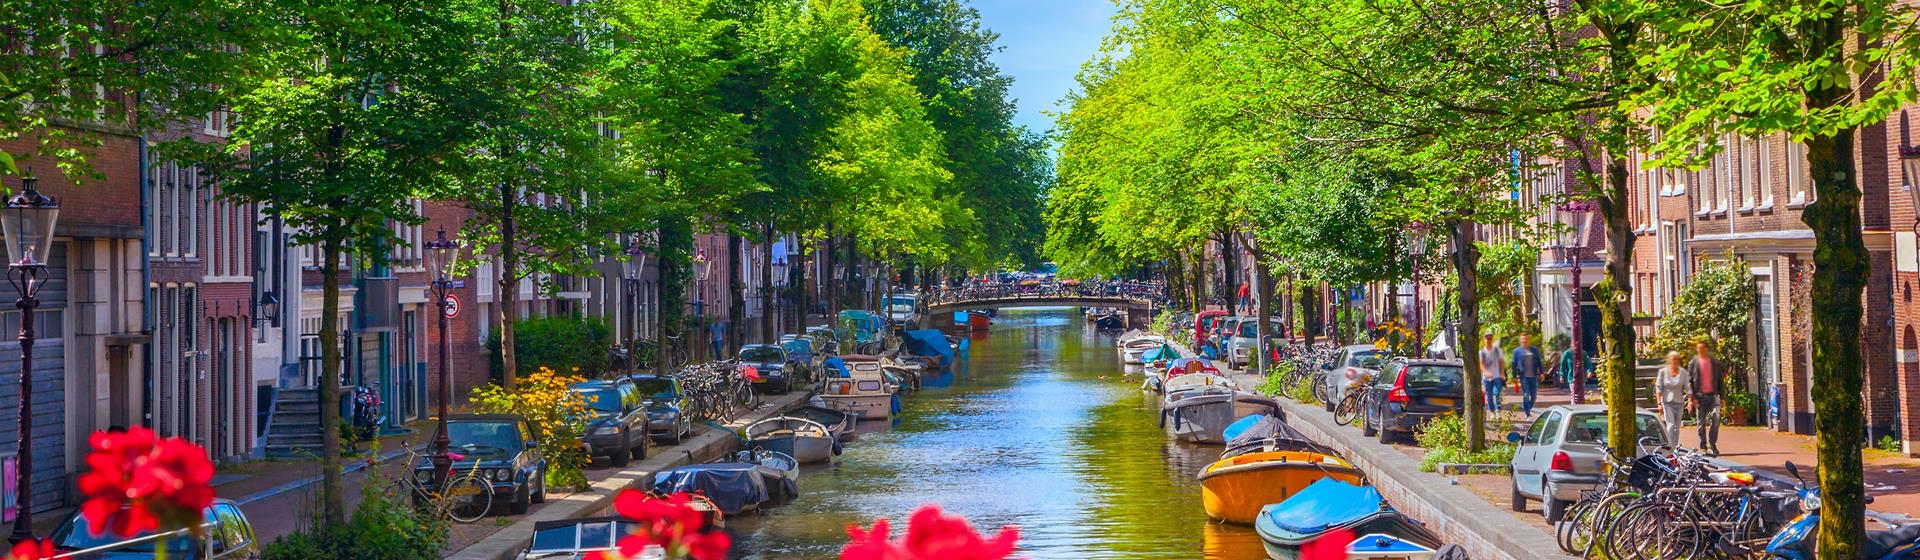 Holidays & City Breaks to Amsterdam